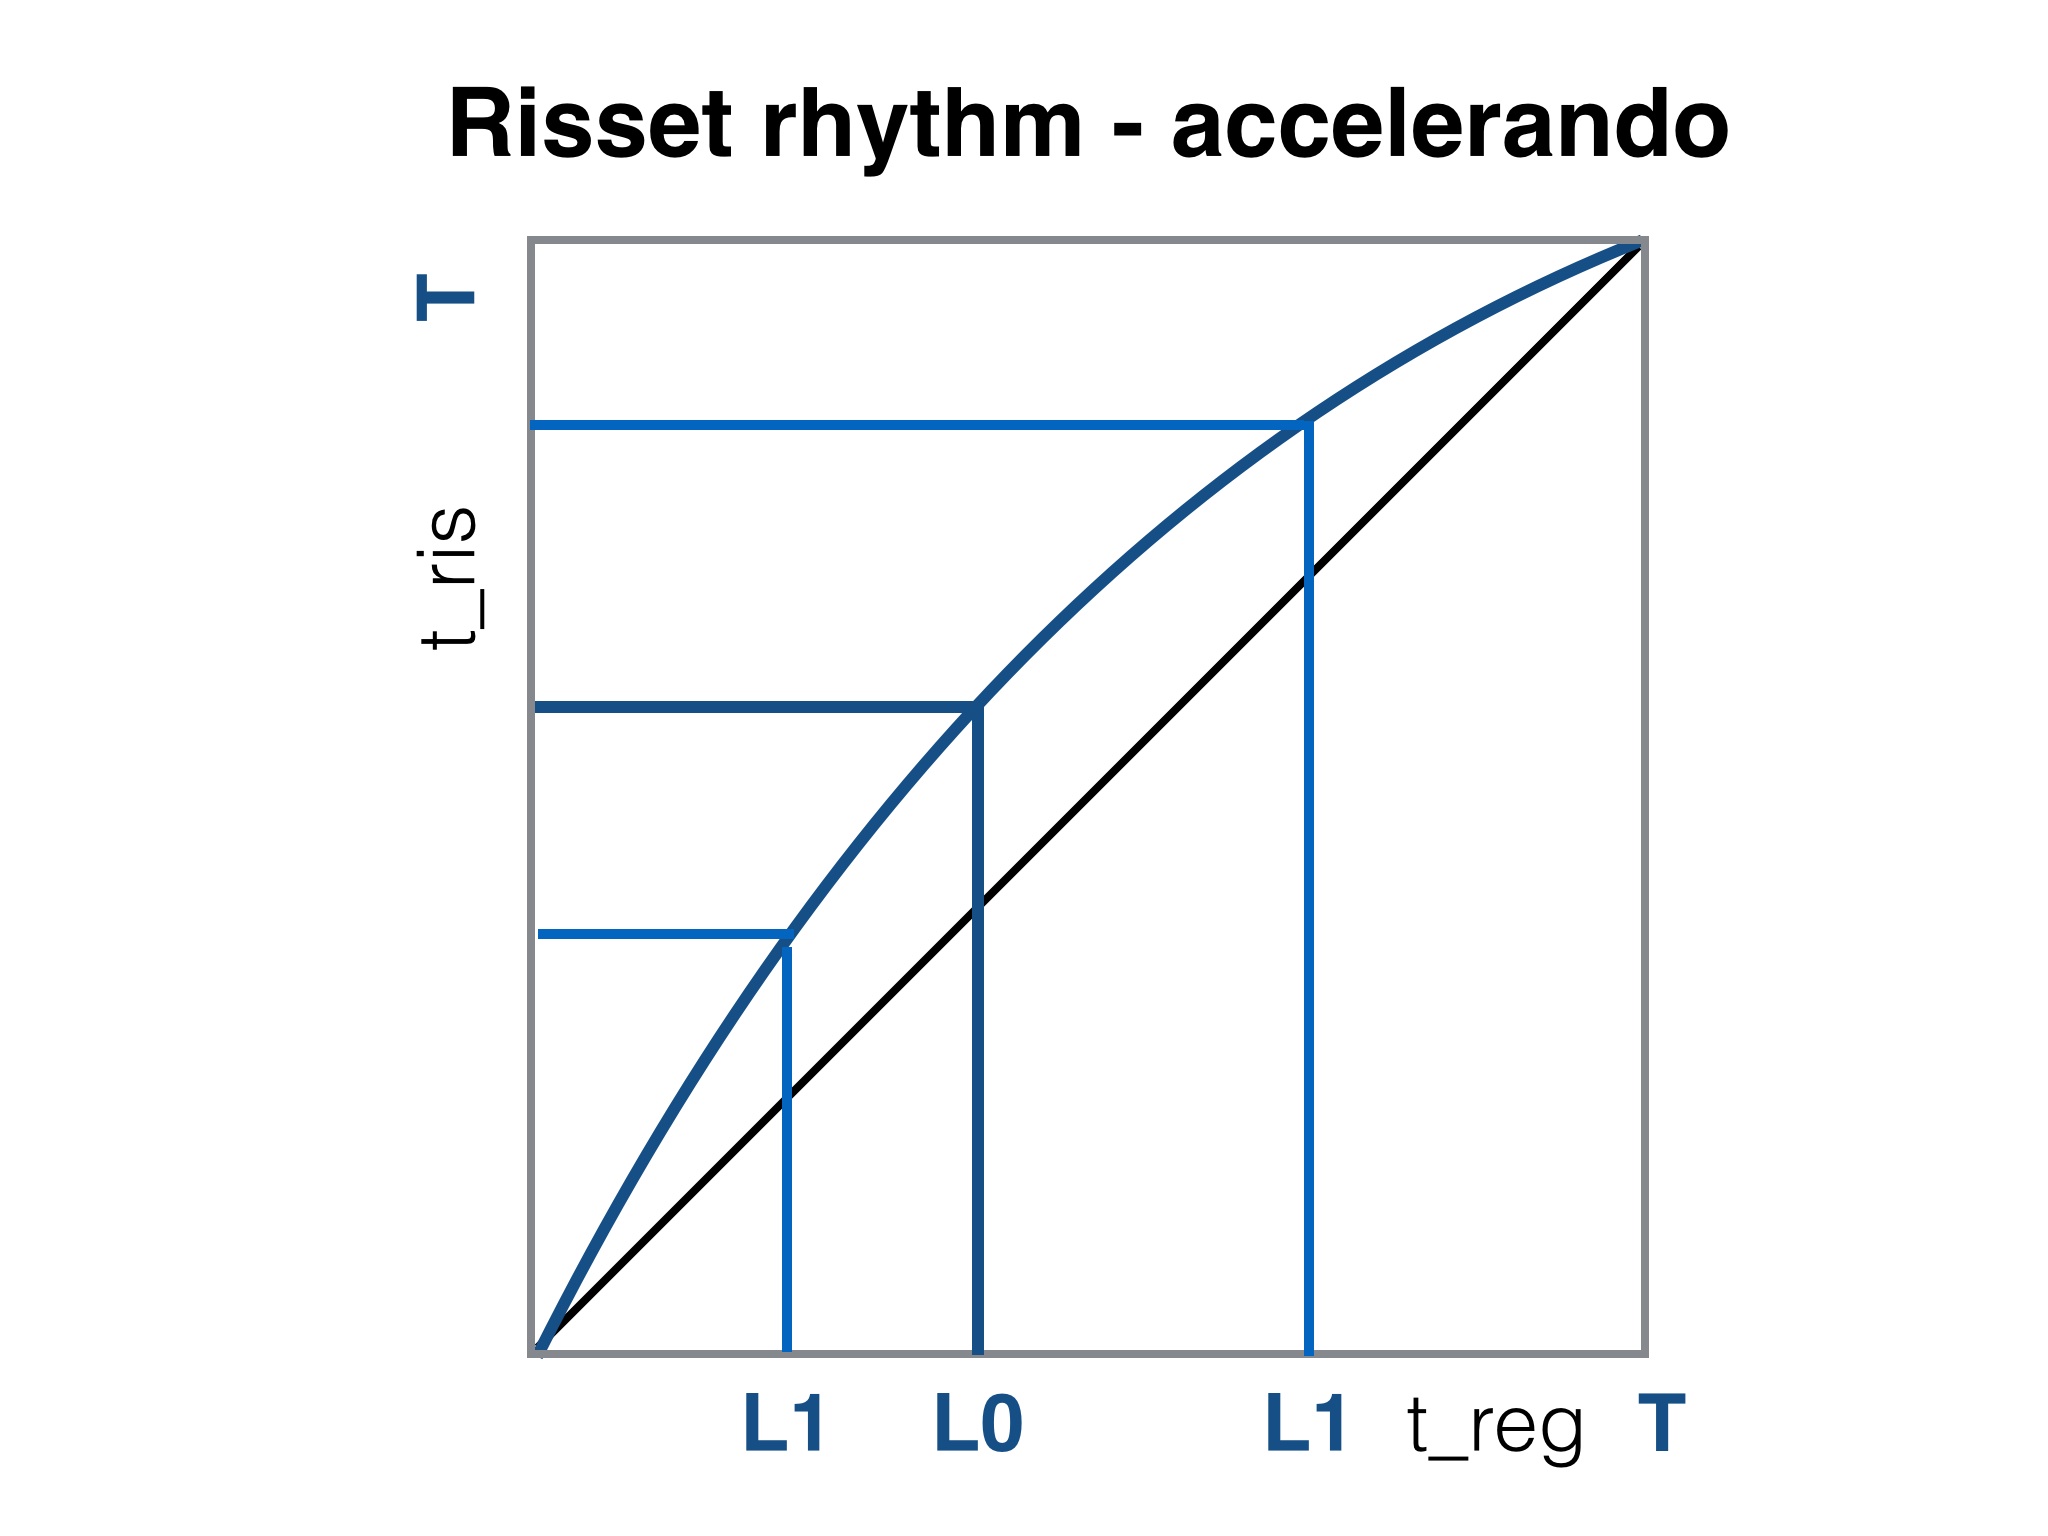 Risset rhythm logarithmic timing